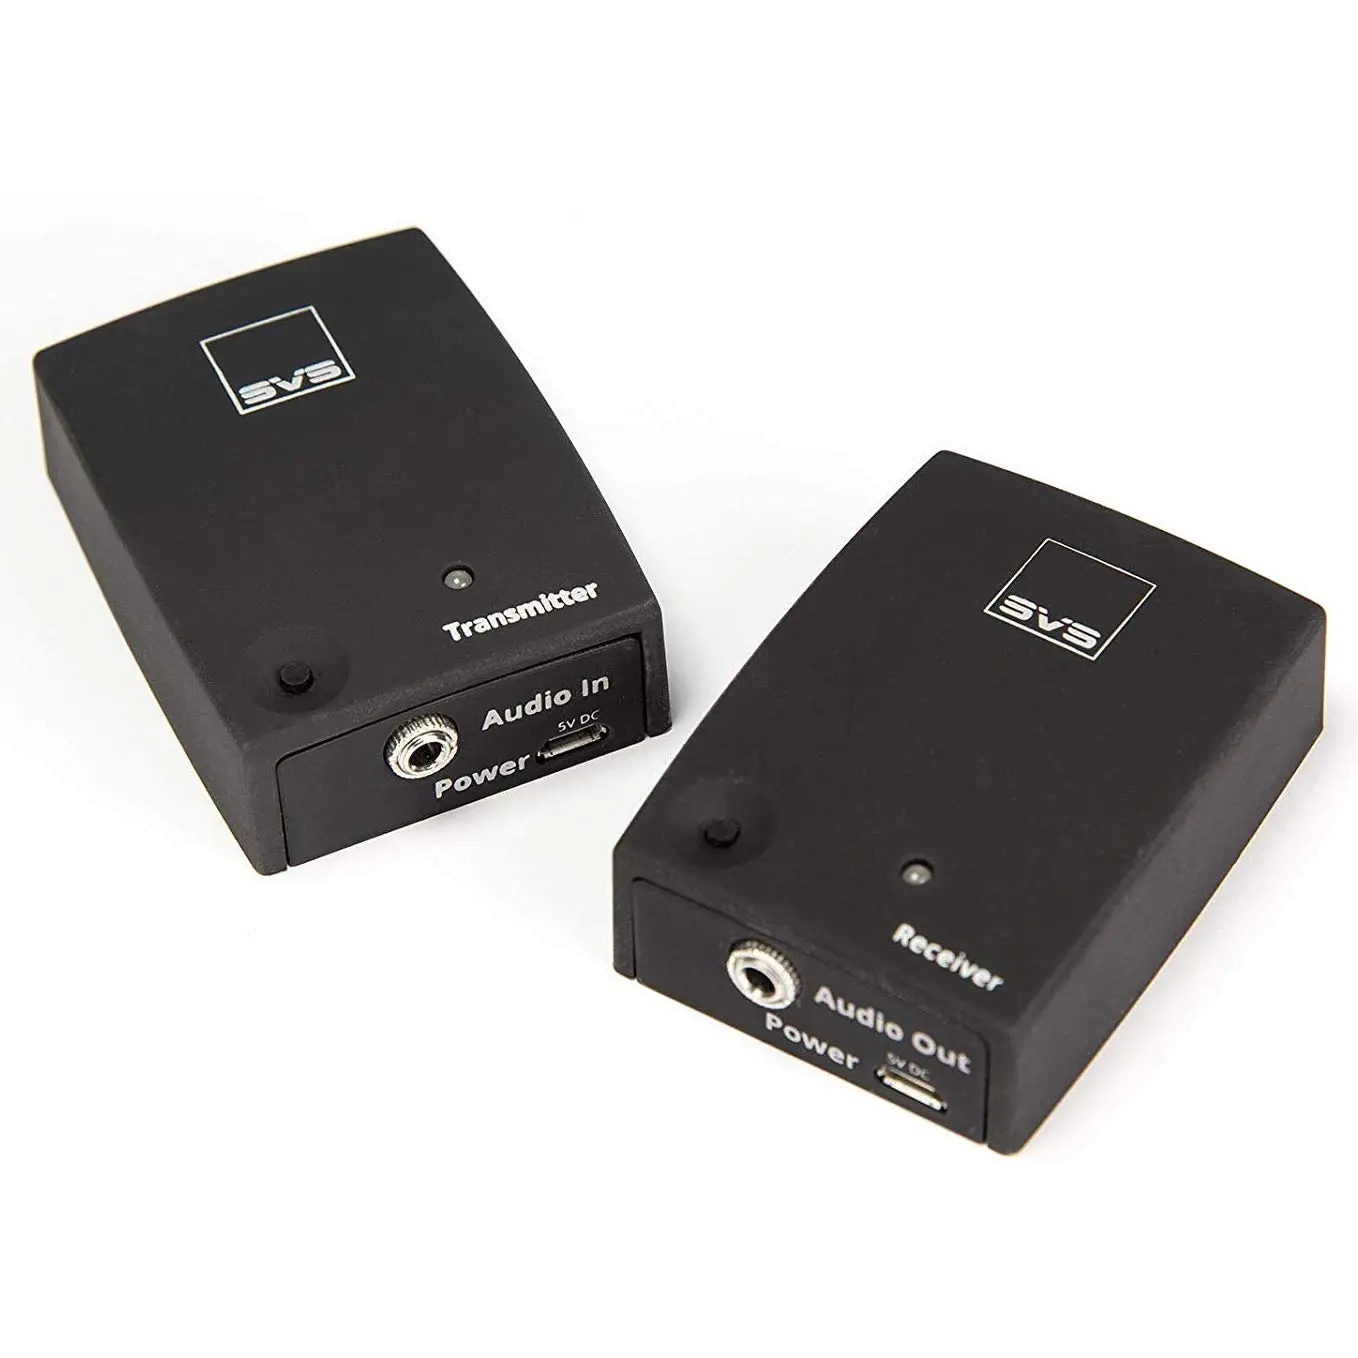 SOUNDPATH WIRELESS AUDIO ADAPTER SVS SoundPath Wireless Audio Adapter-1